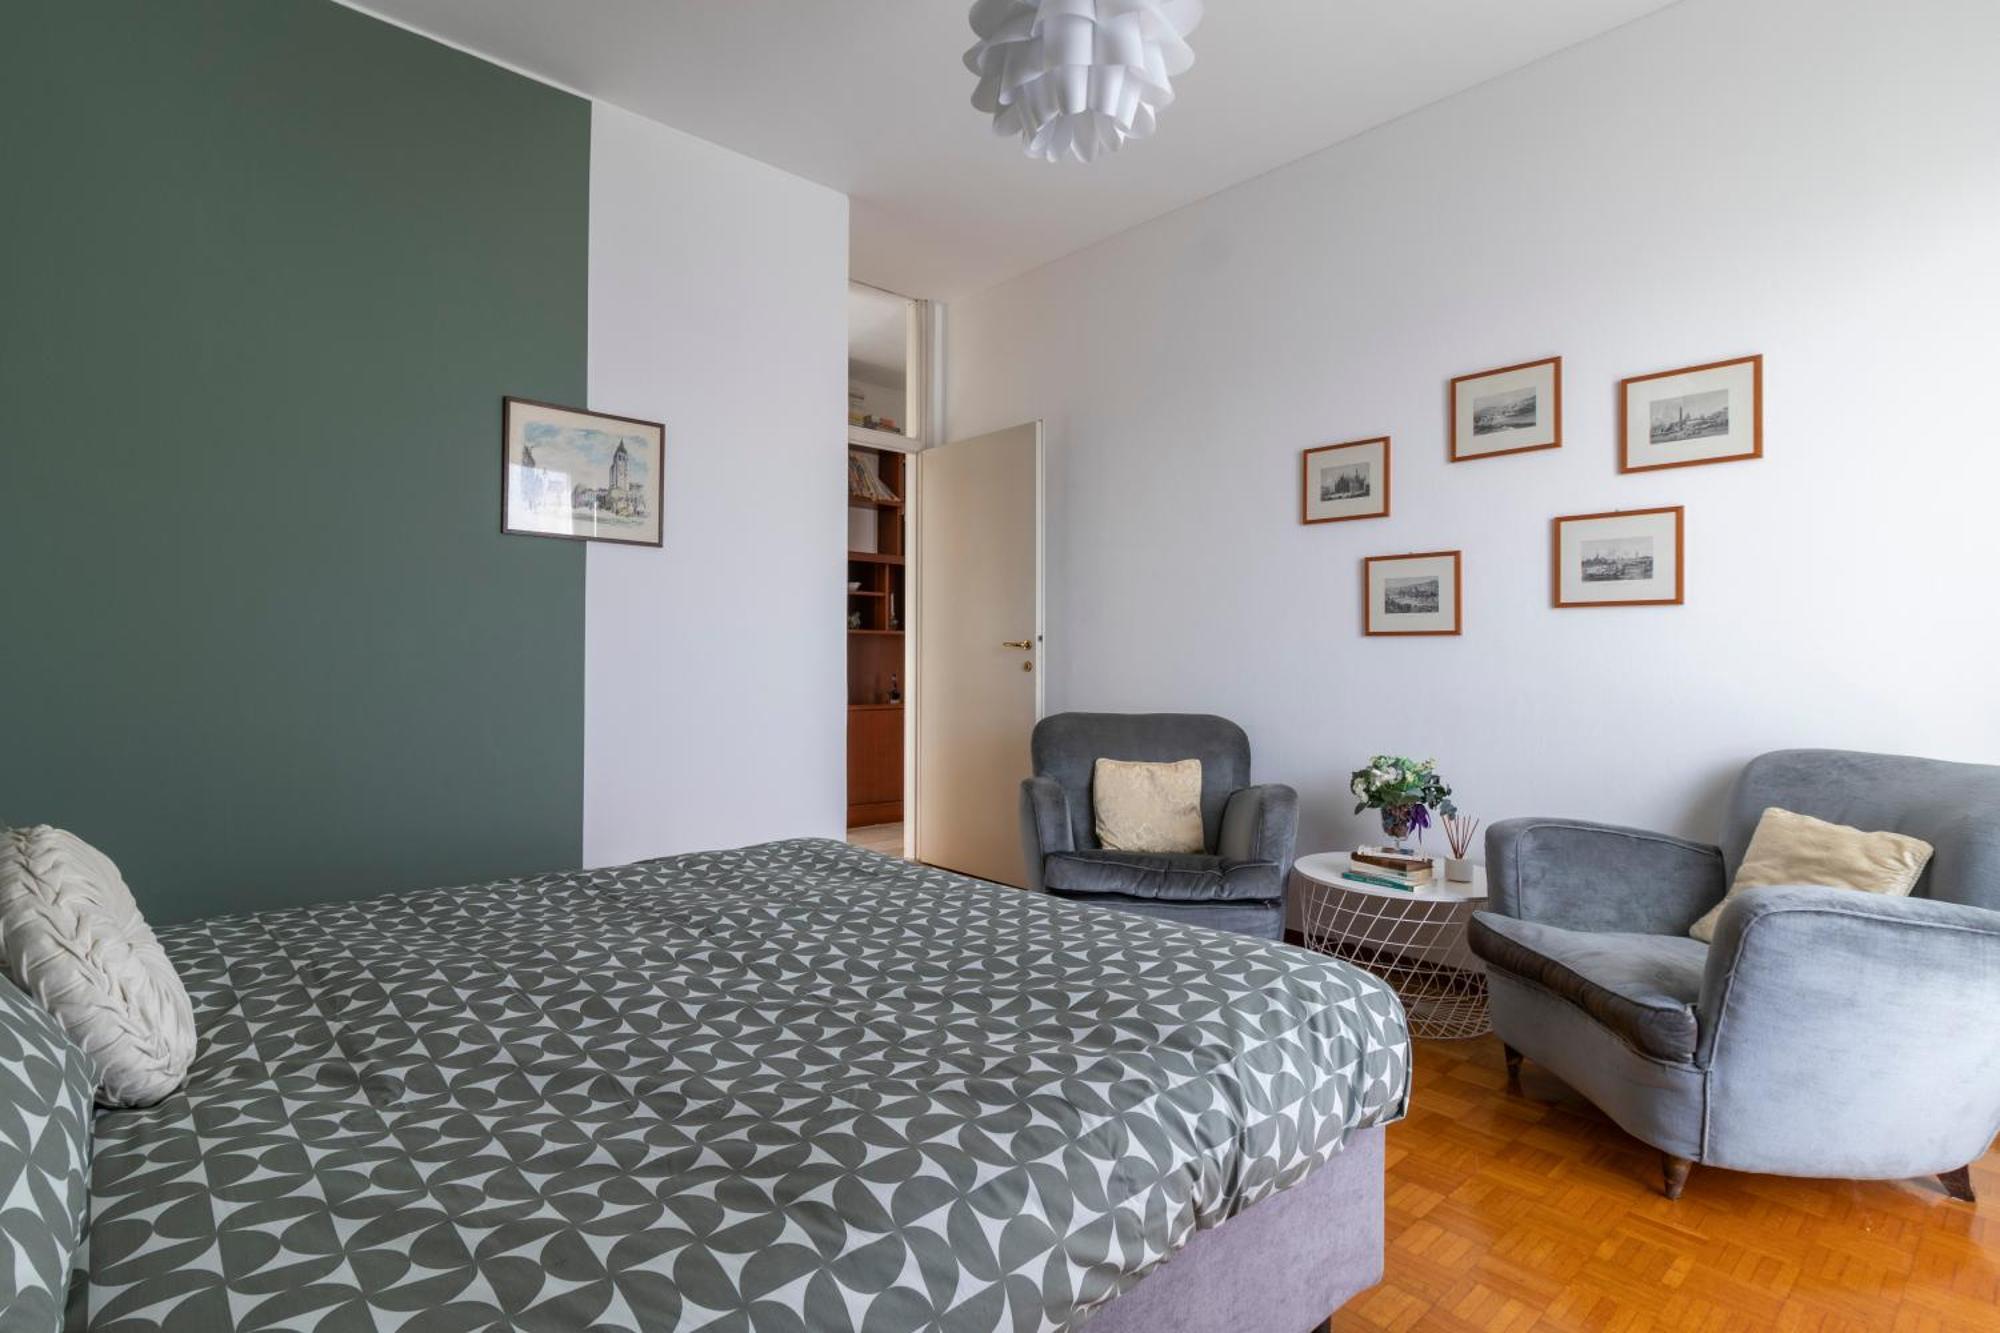 Casa Carozzi - Carozzi Apartments Milano Dış mekan fotoğraf